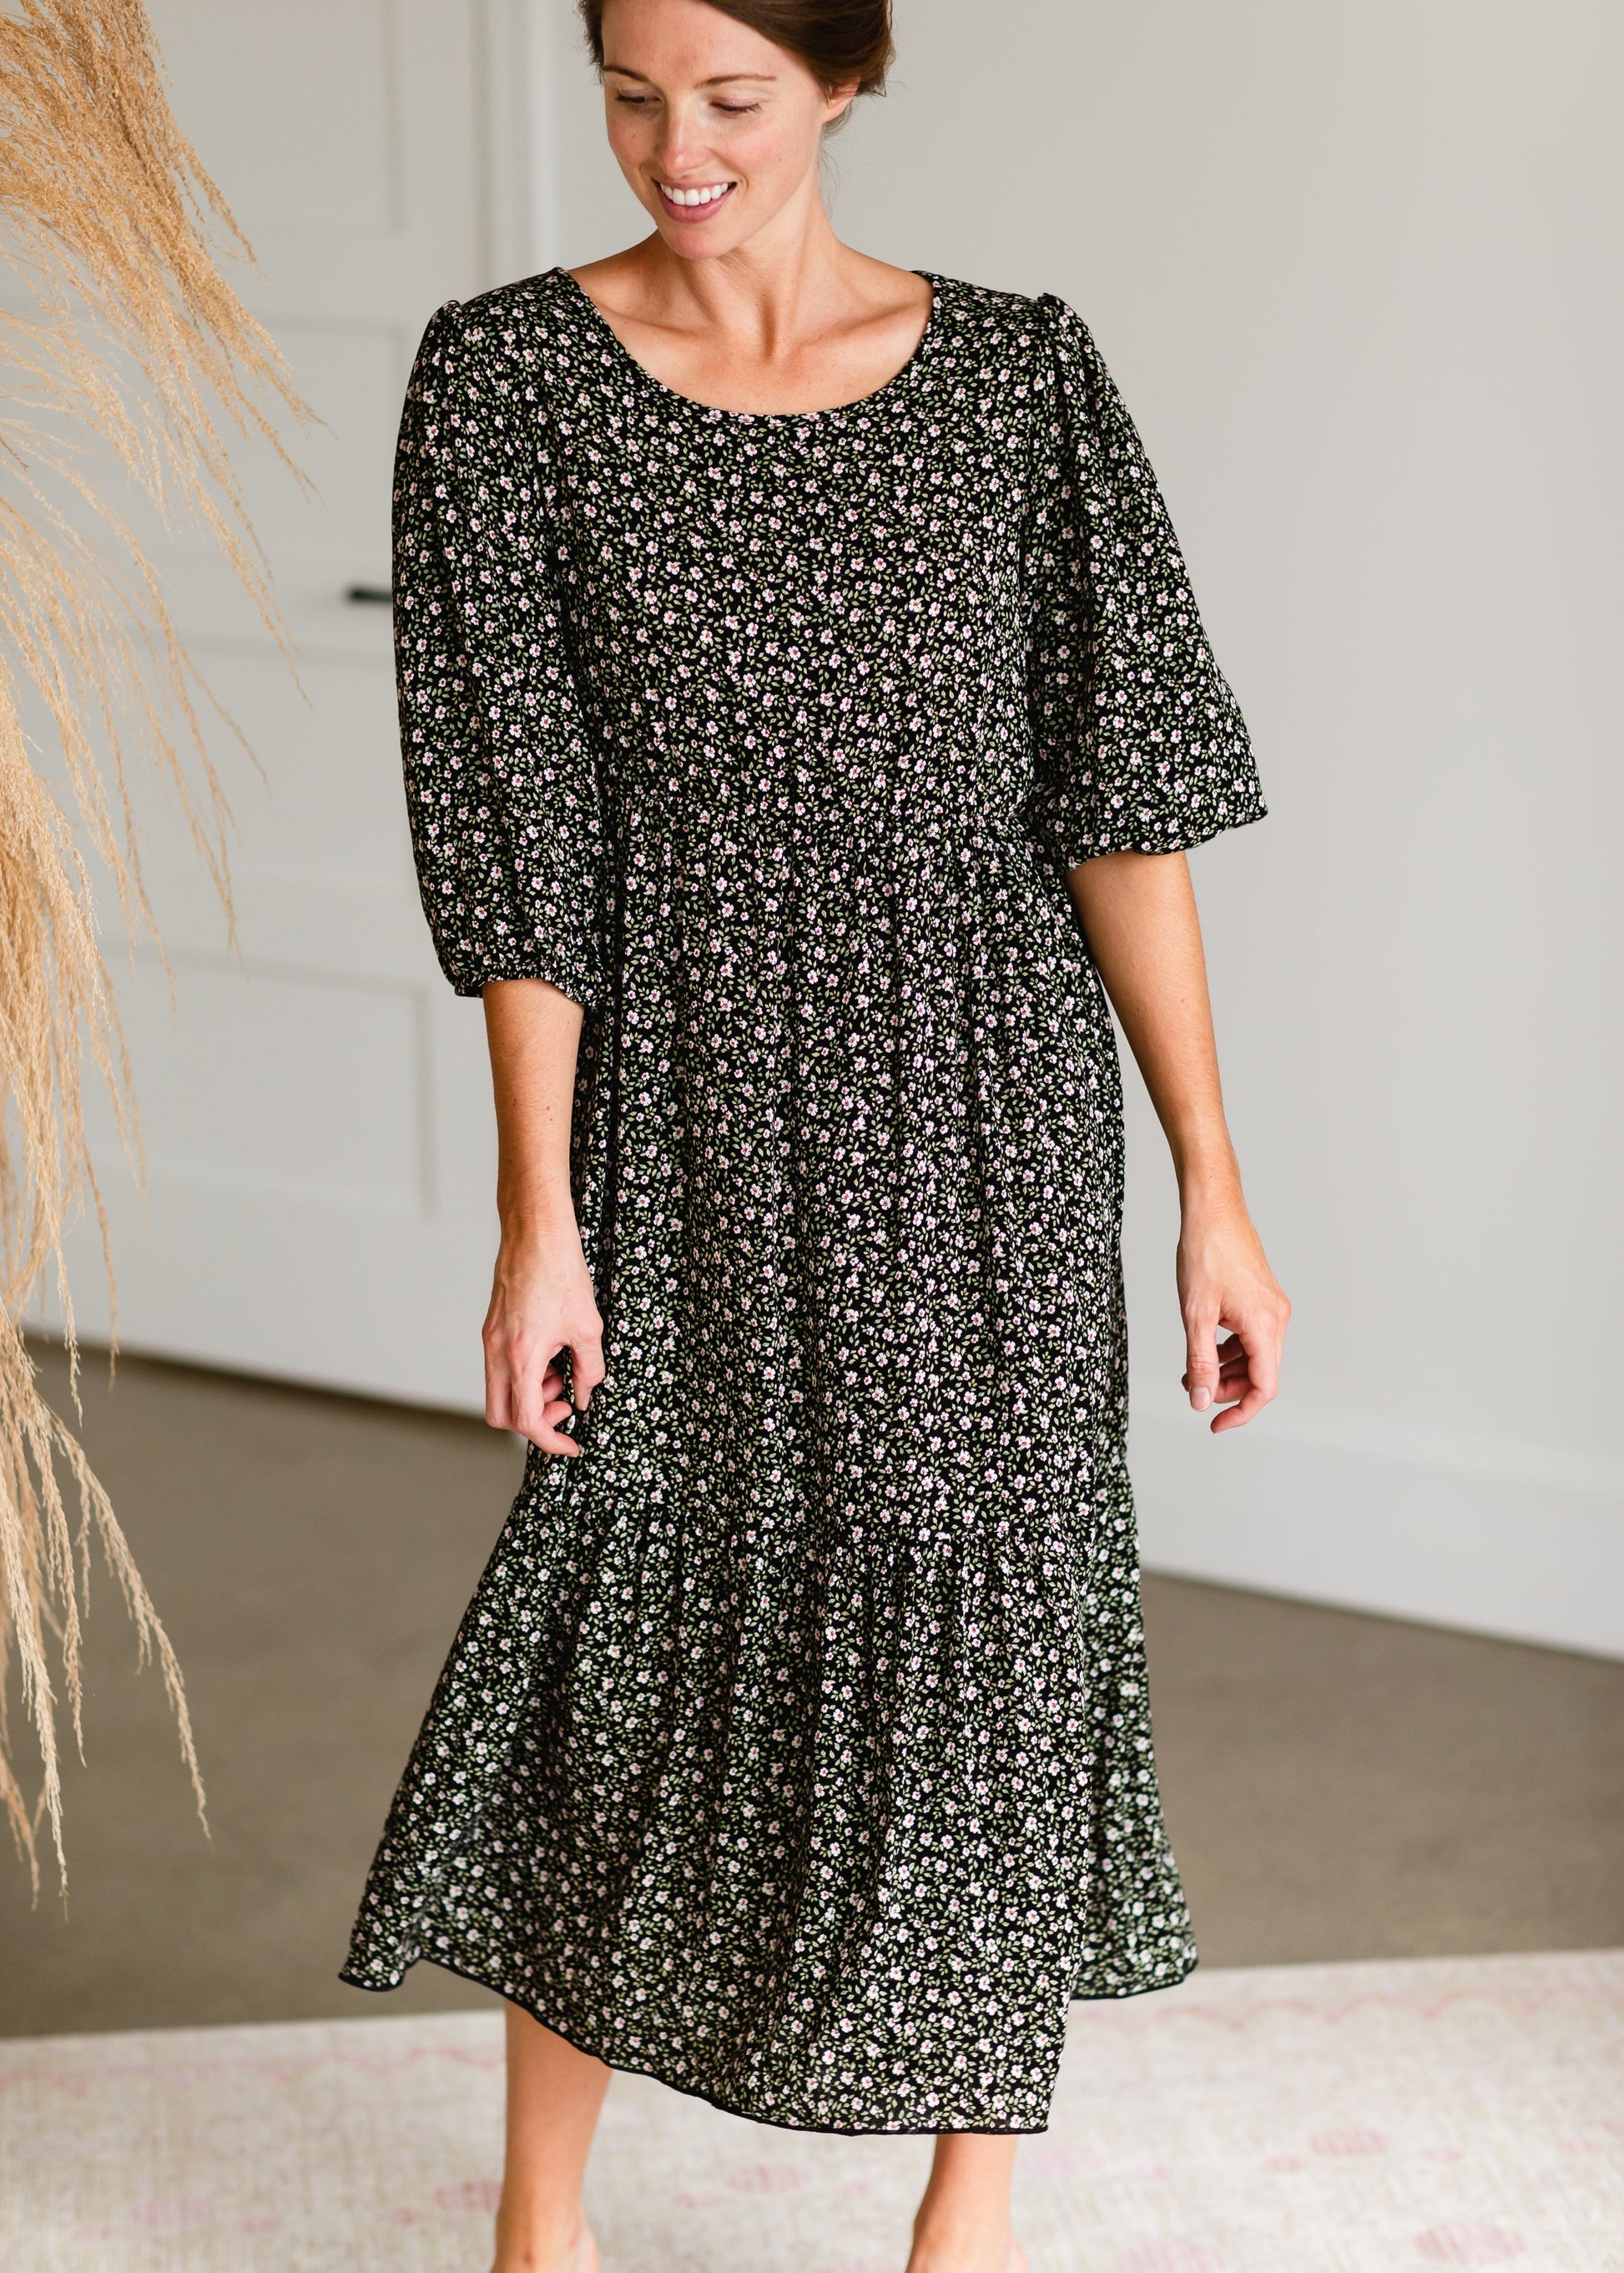 Tiered Black Floral Print Maxi Dress - FINAL SALE Dresses